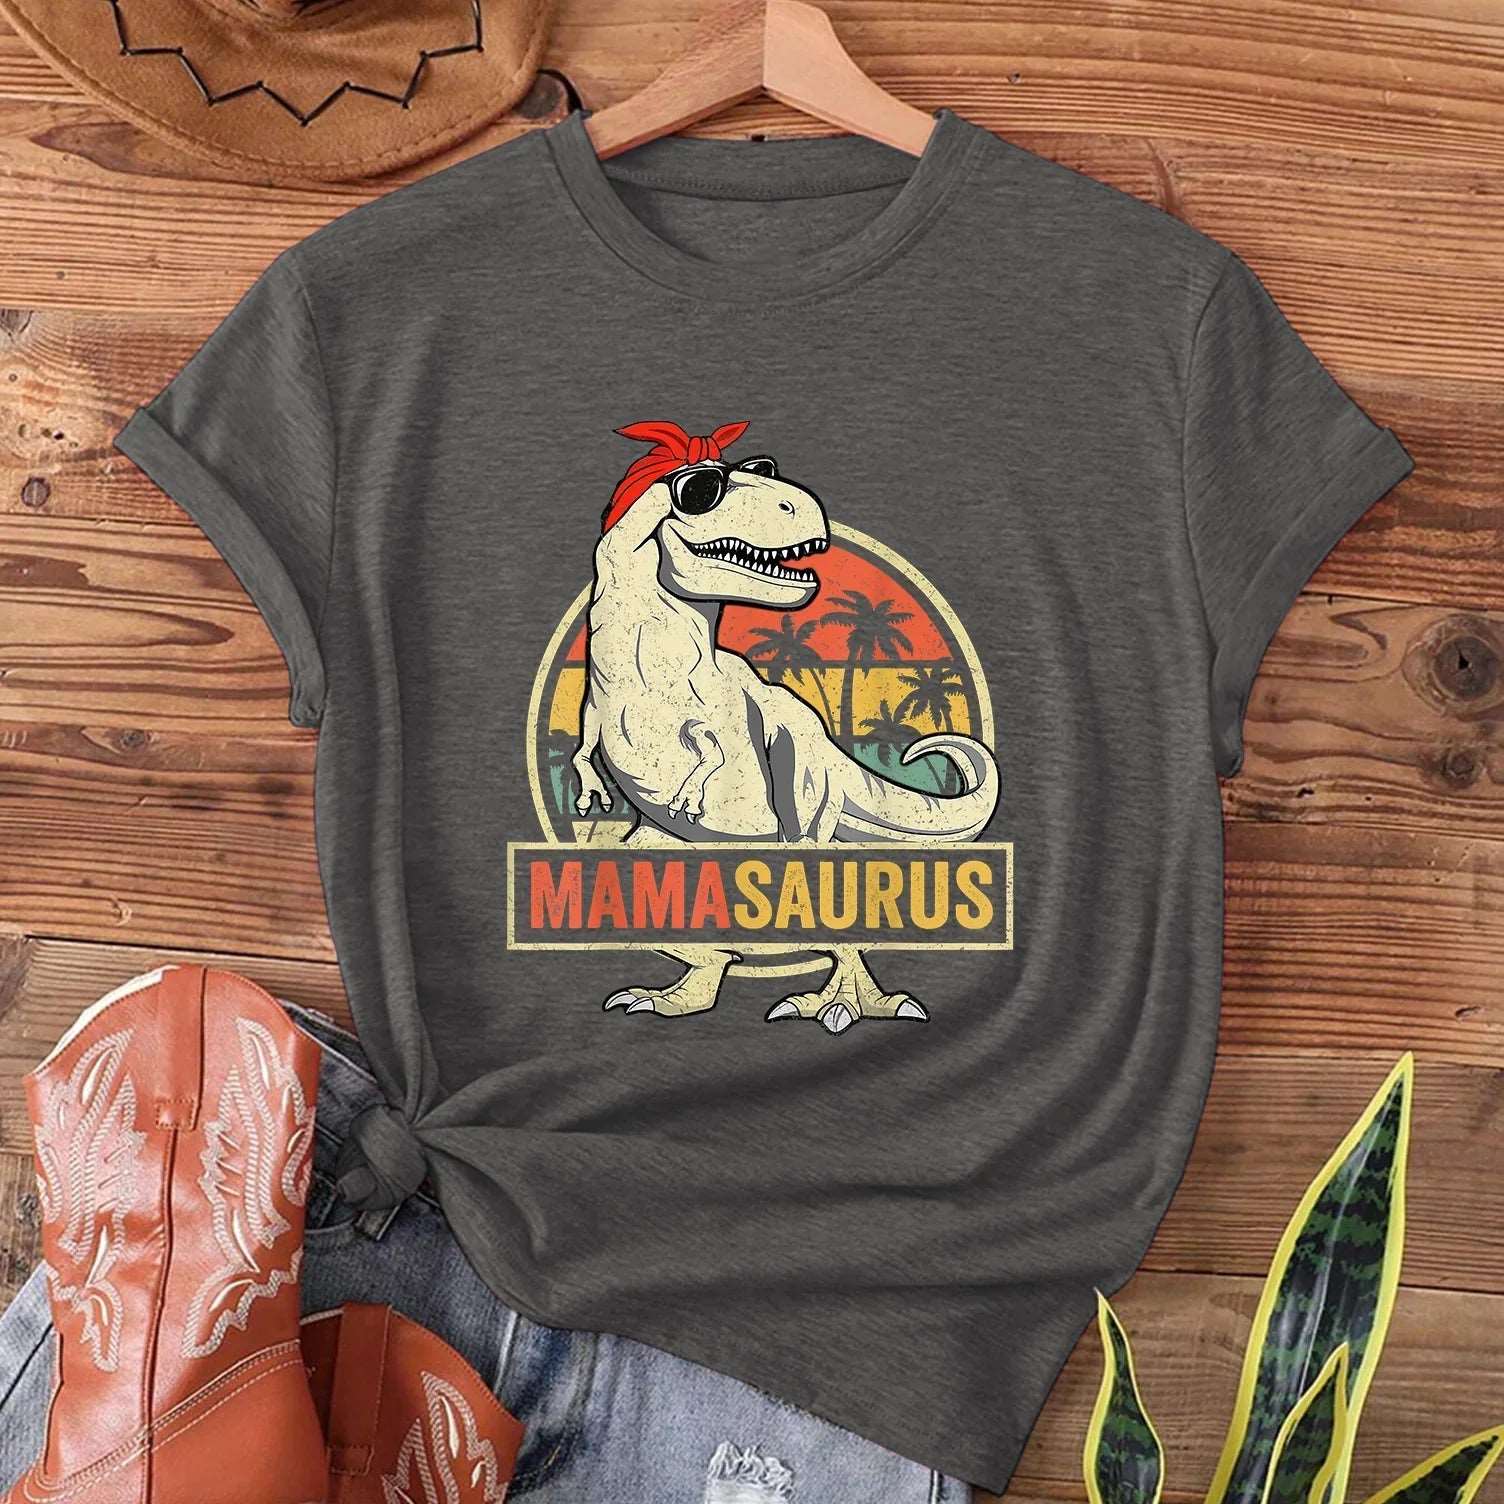 Dinosaur Mamasaurus Women's T-shirt - T Shirts from Dear Cece - Just £17.99! Shop now at Dear Cece